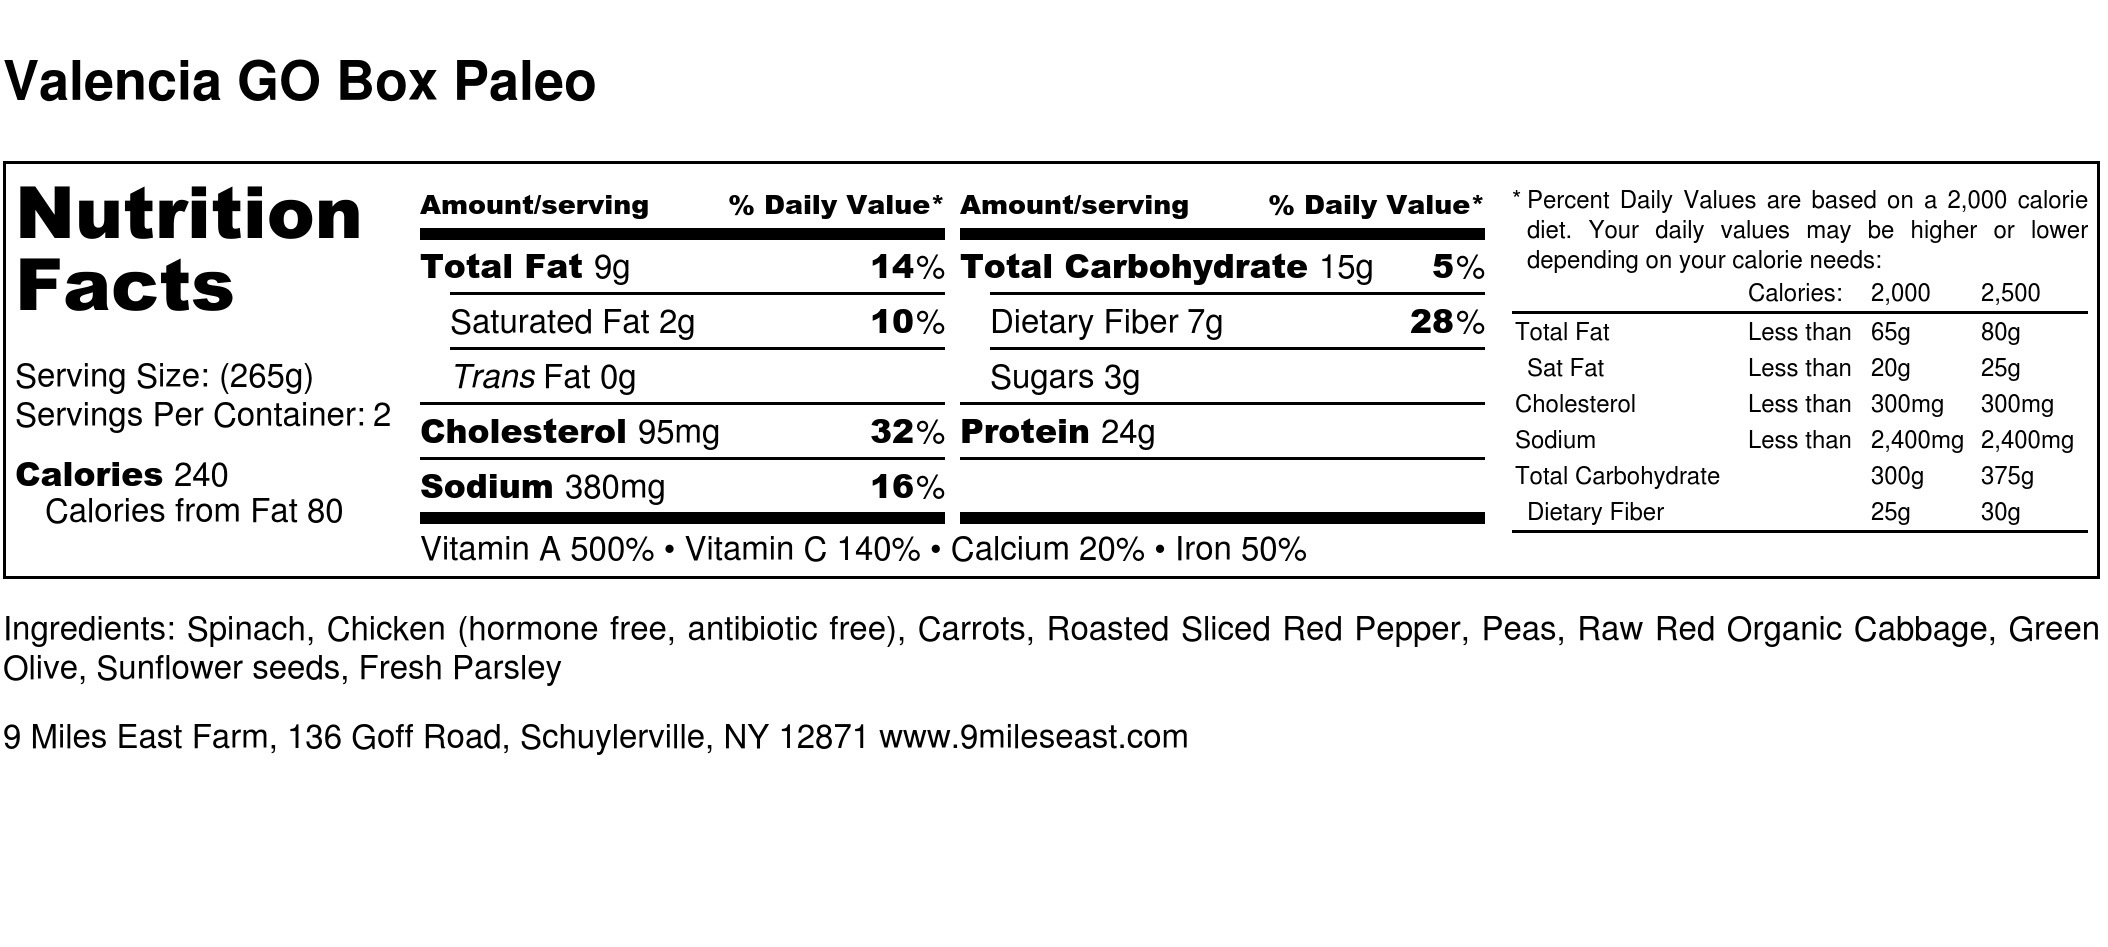 Valencia GO Box Paleo - Nutrition Label.jpg